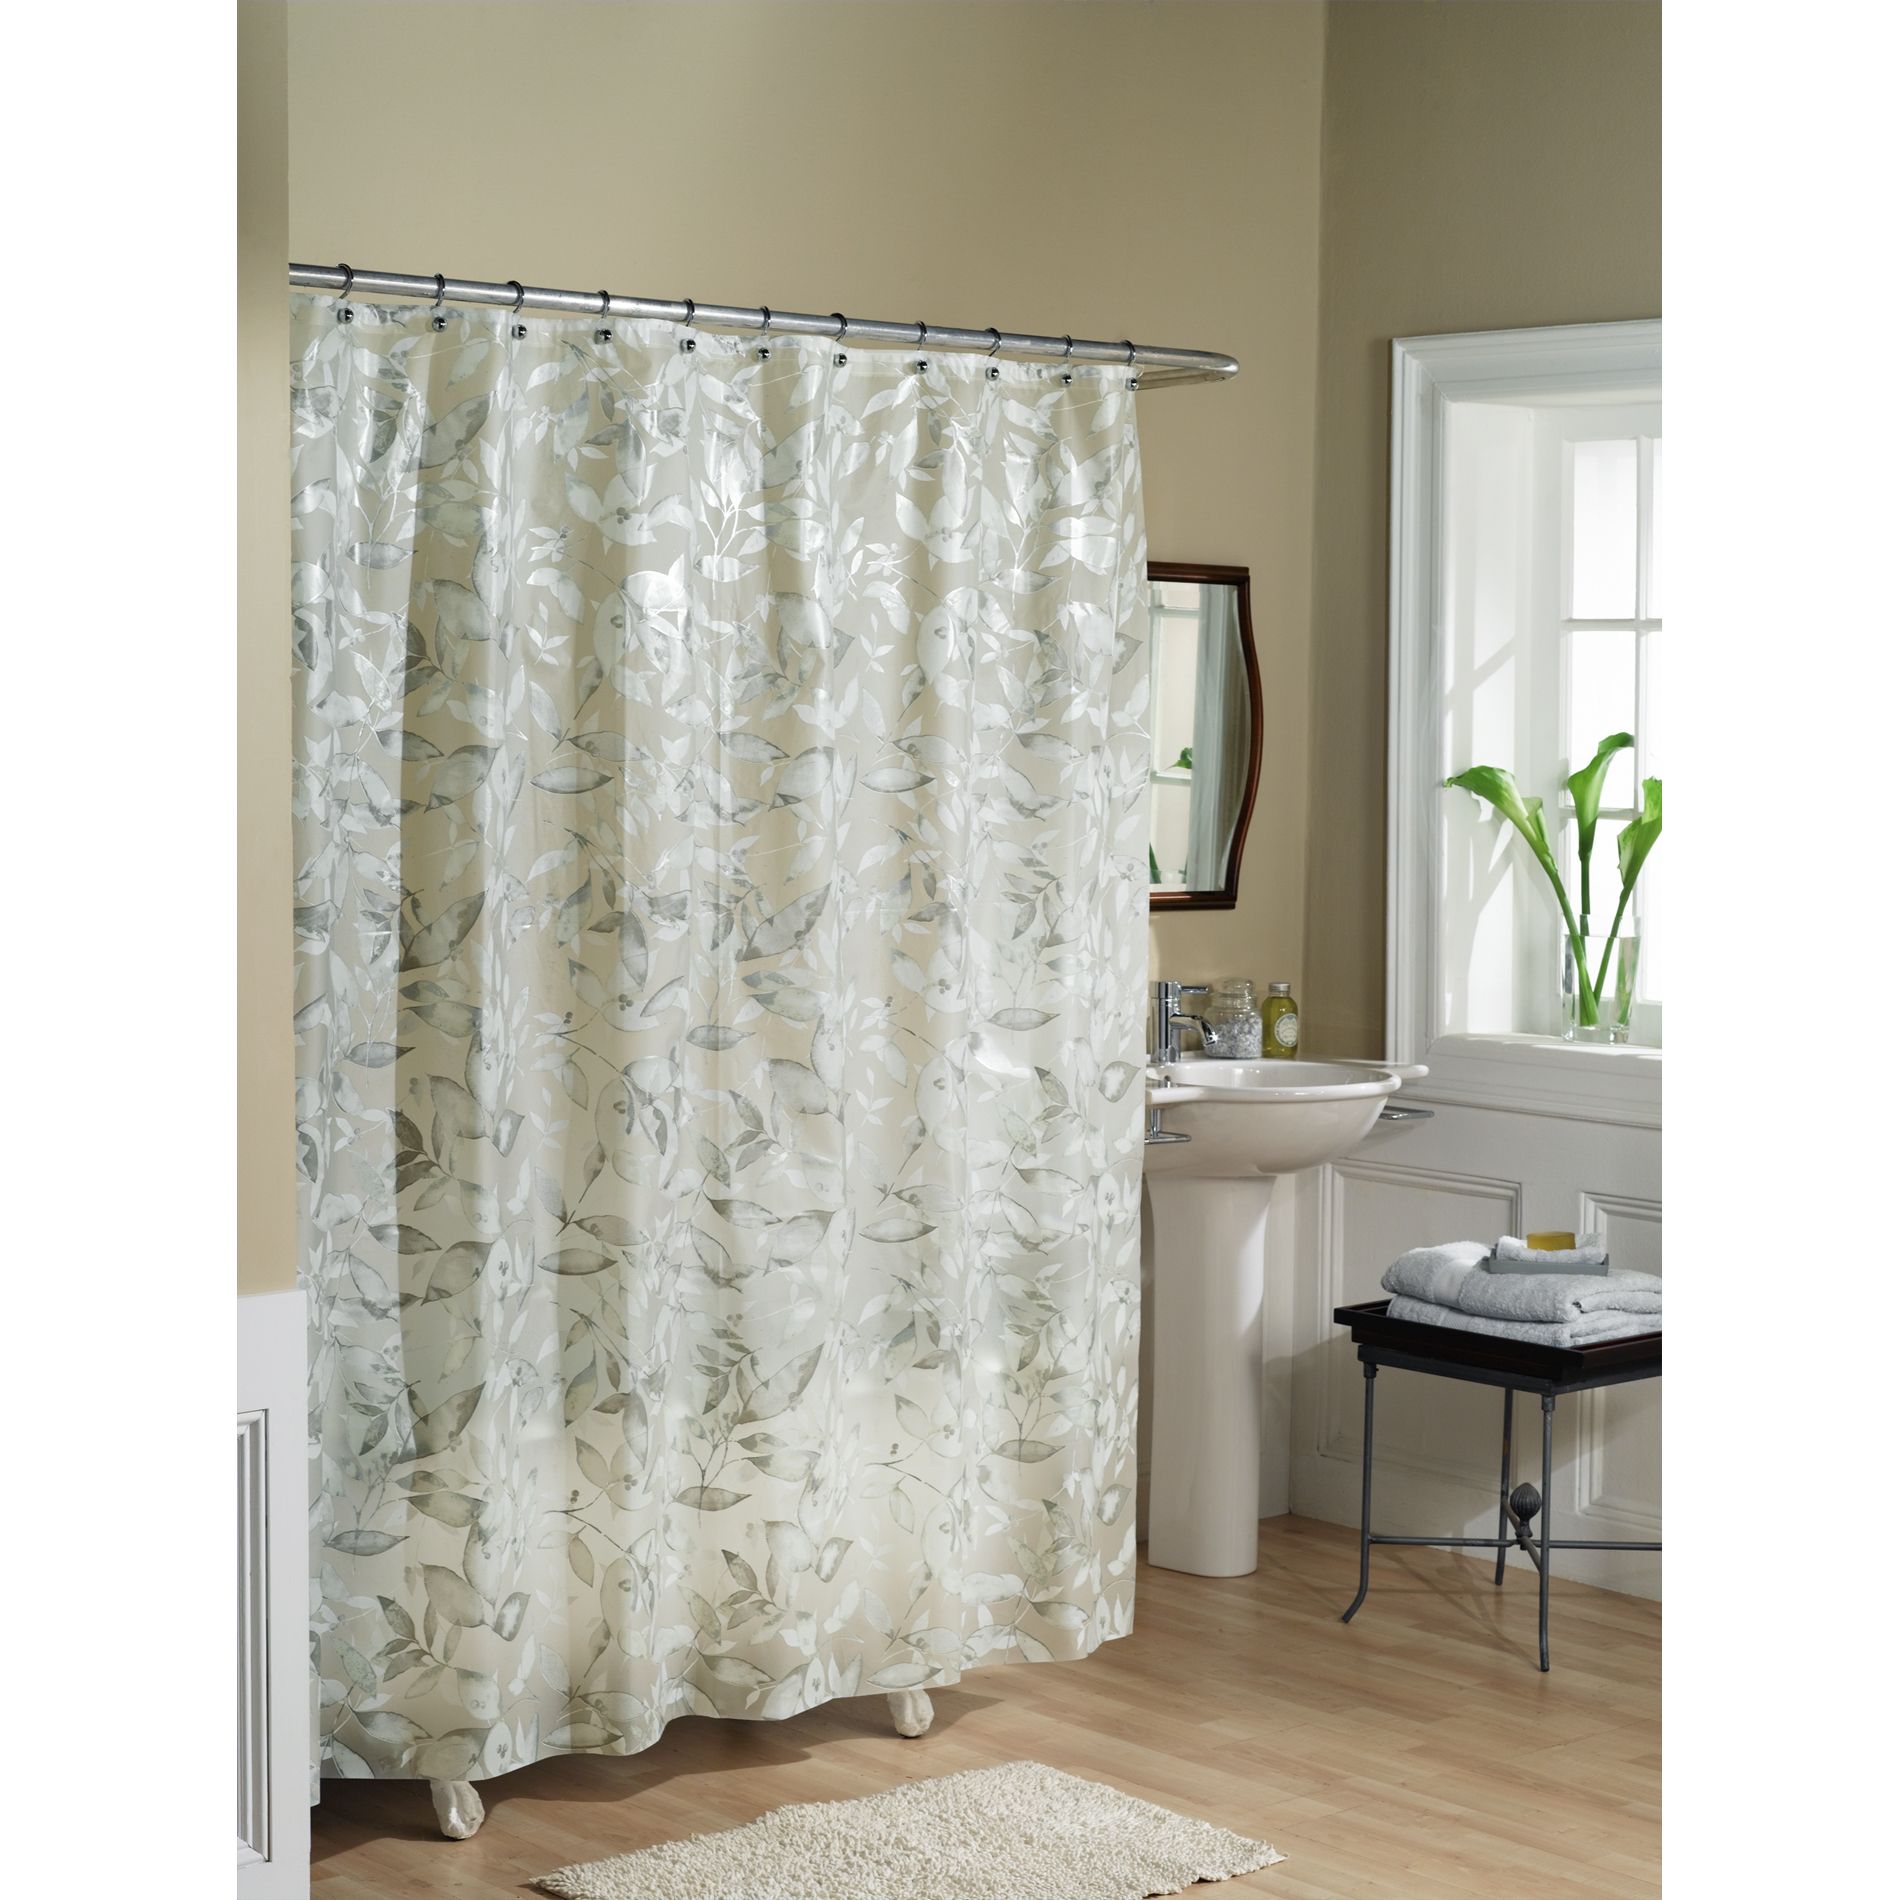 Shower Curtain Design Ideas home design idea bathroom designs